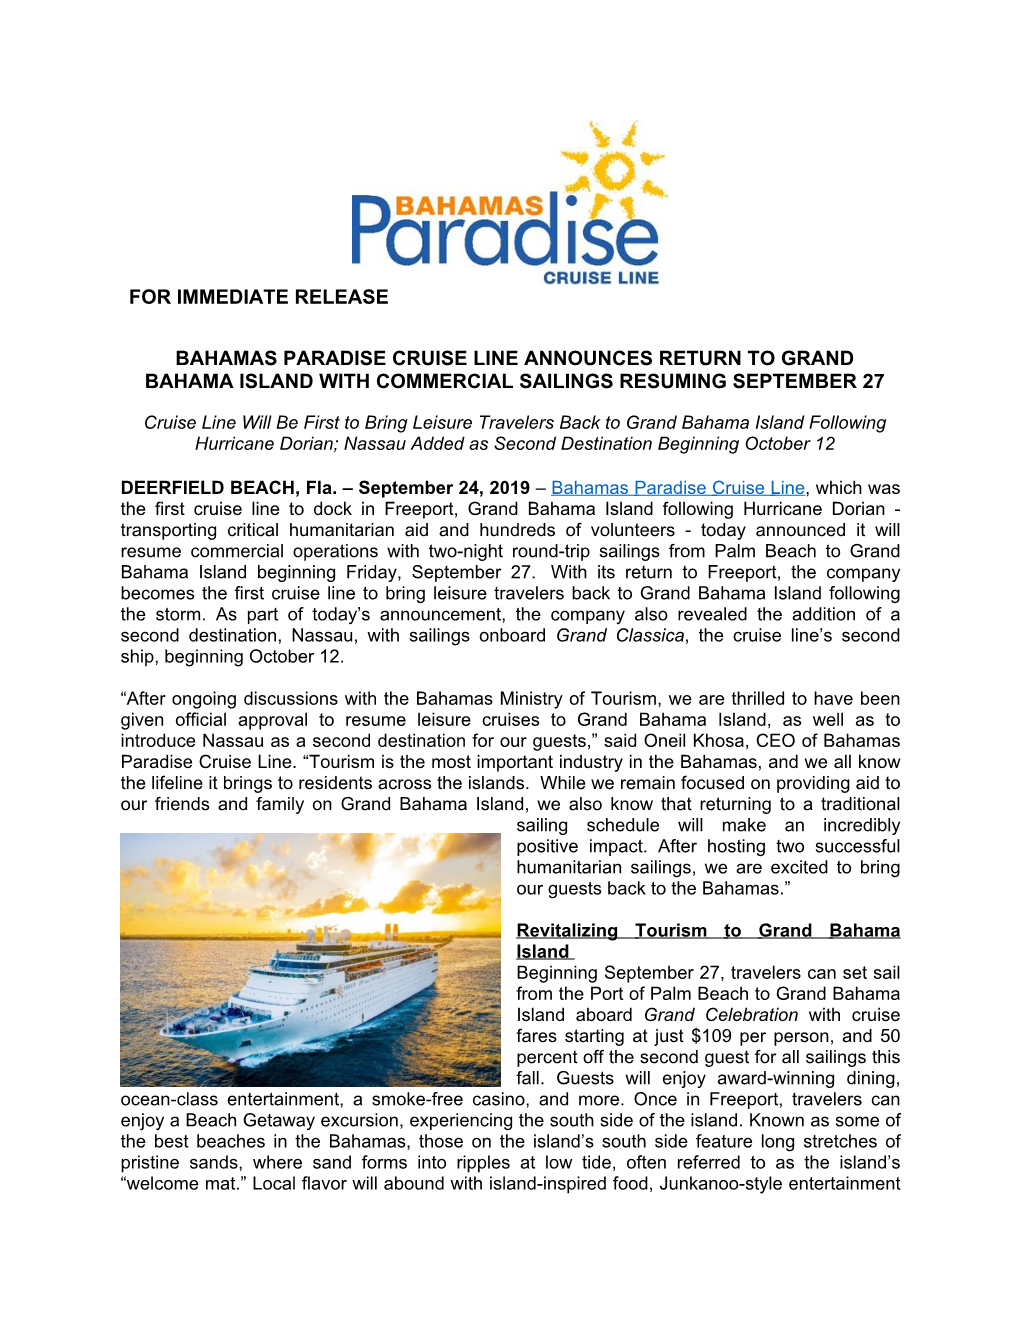 Bahamas Paradise Cruise Line Press Release 9-24-19